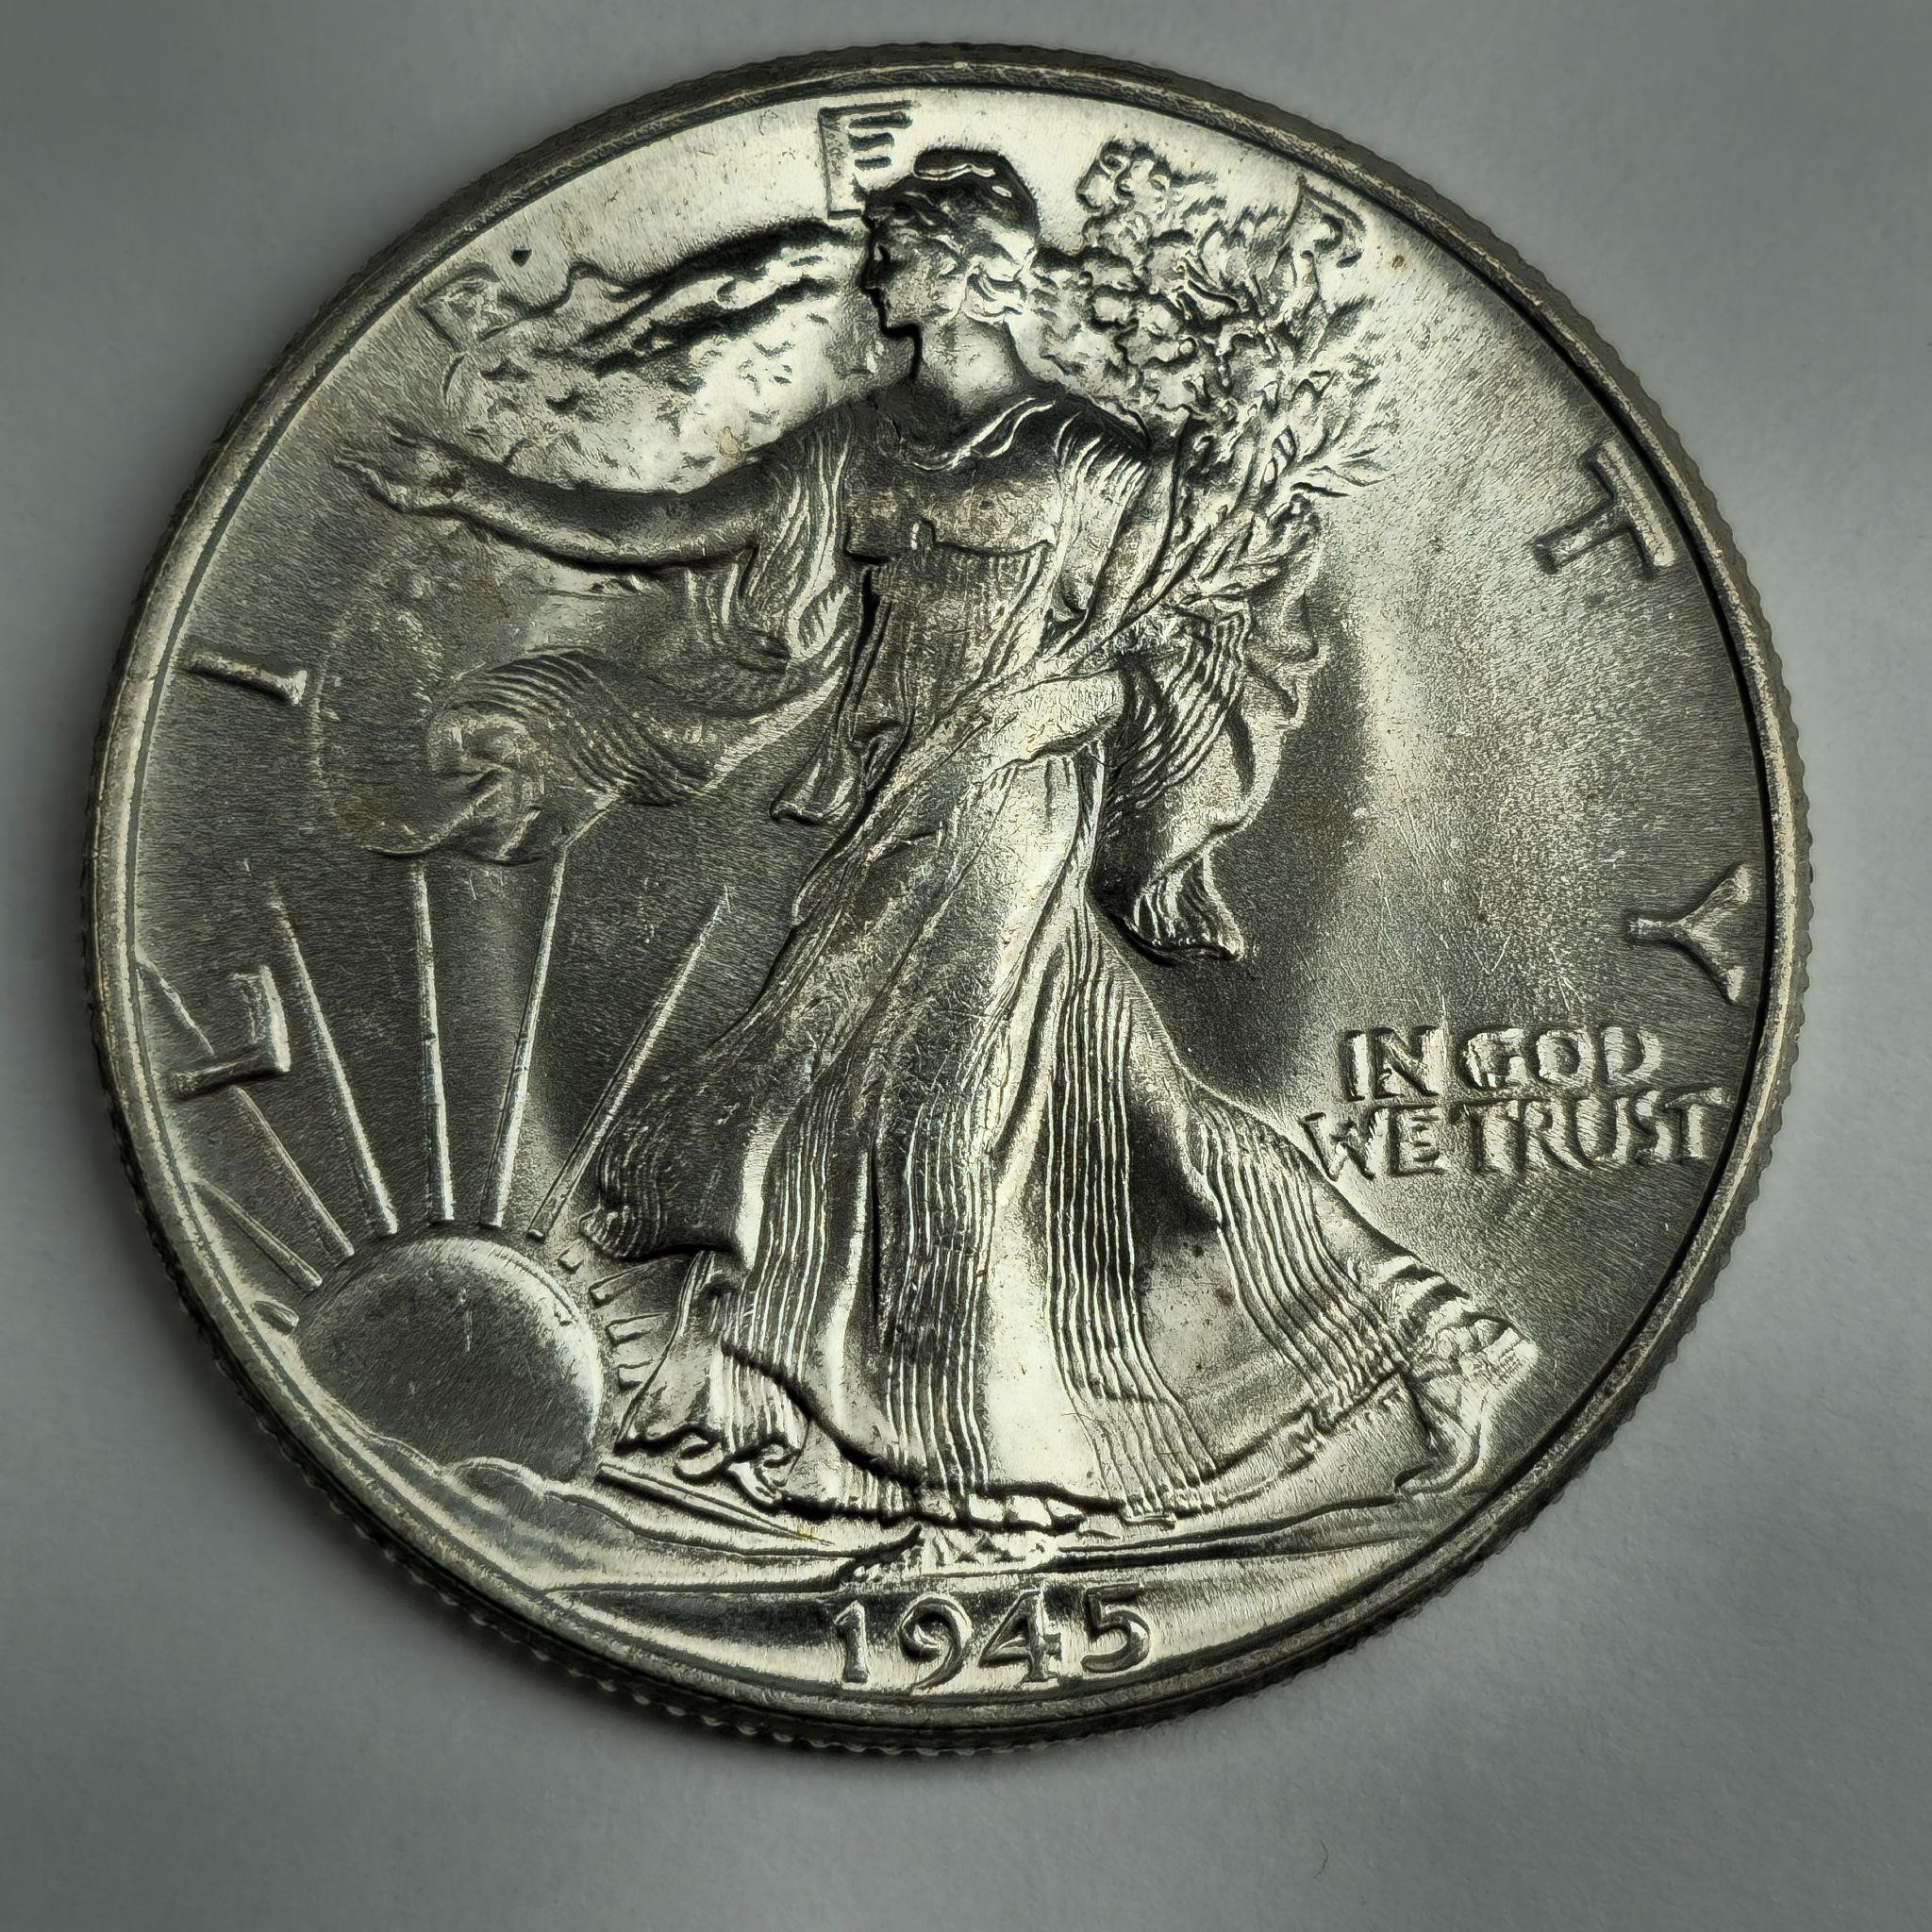 1945 Walking Liberty Half Dollar. Gem uncirculated